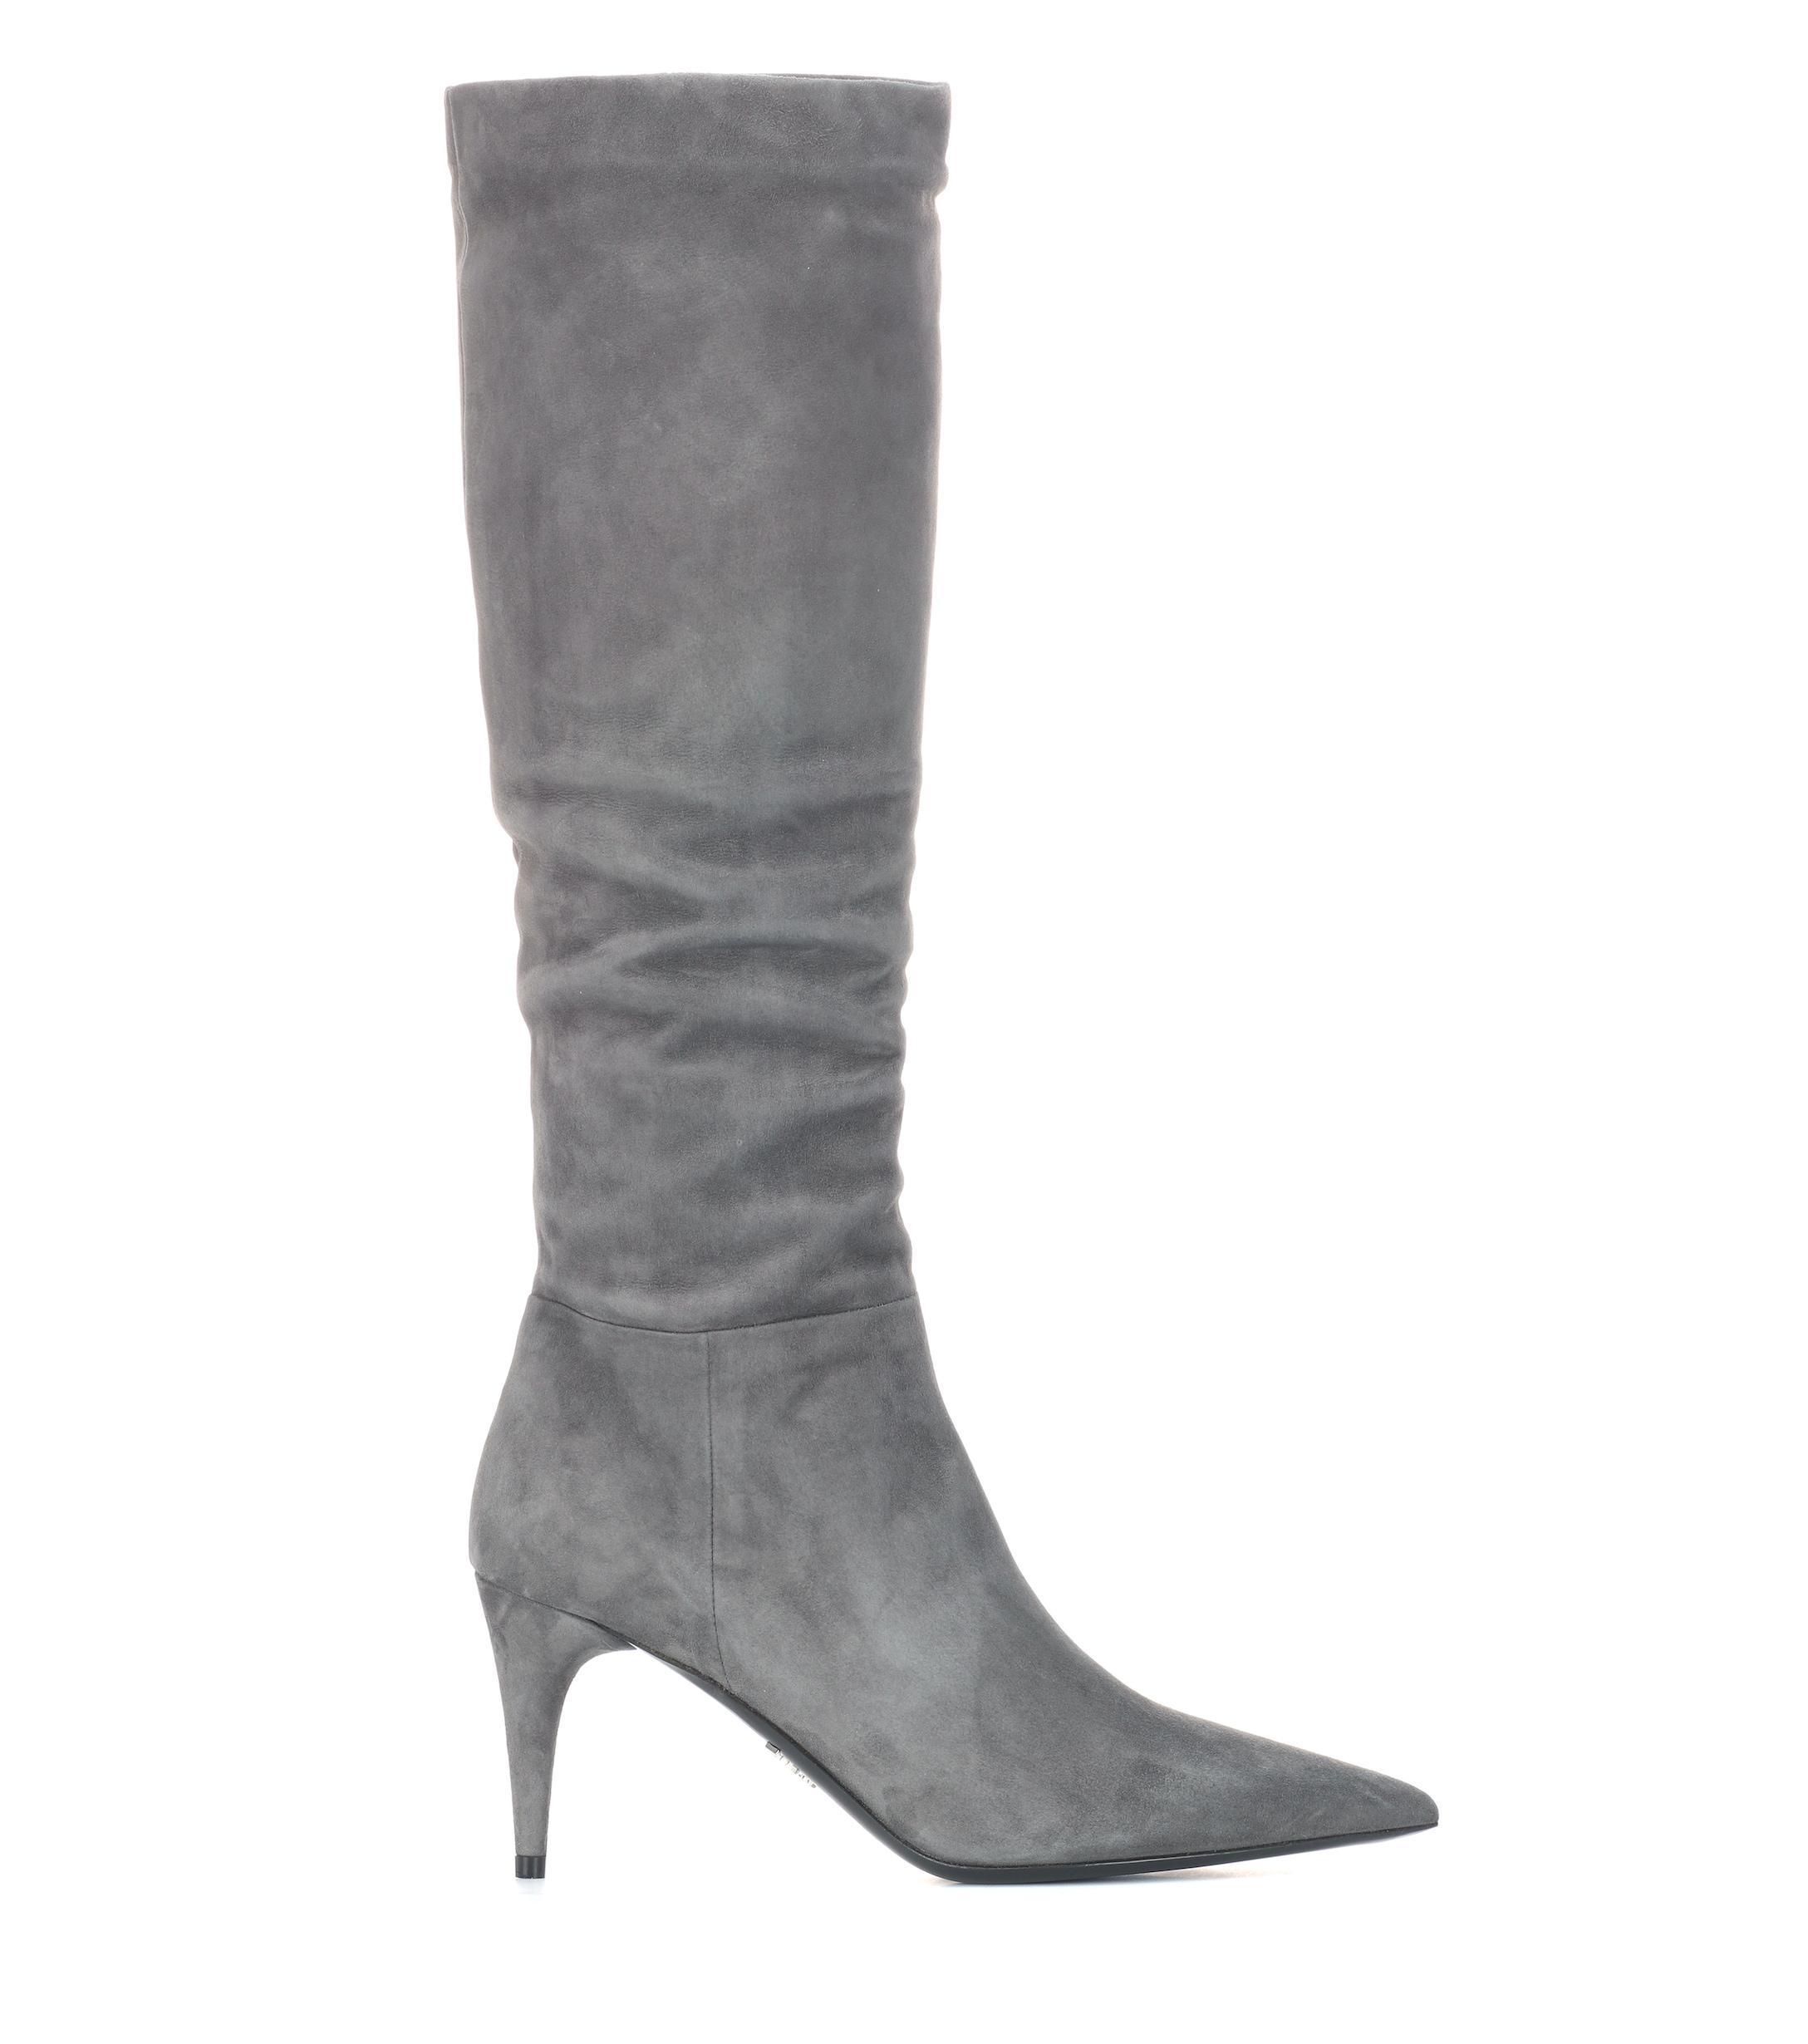 Prada Suede Boots in Grey (Gray) - Lyst